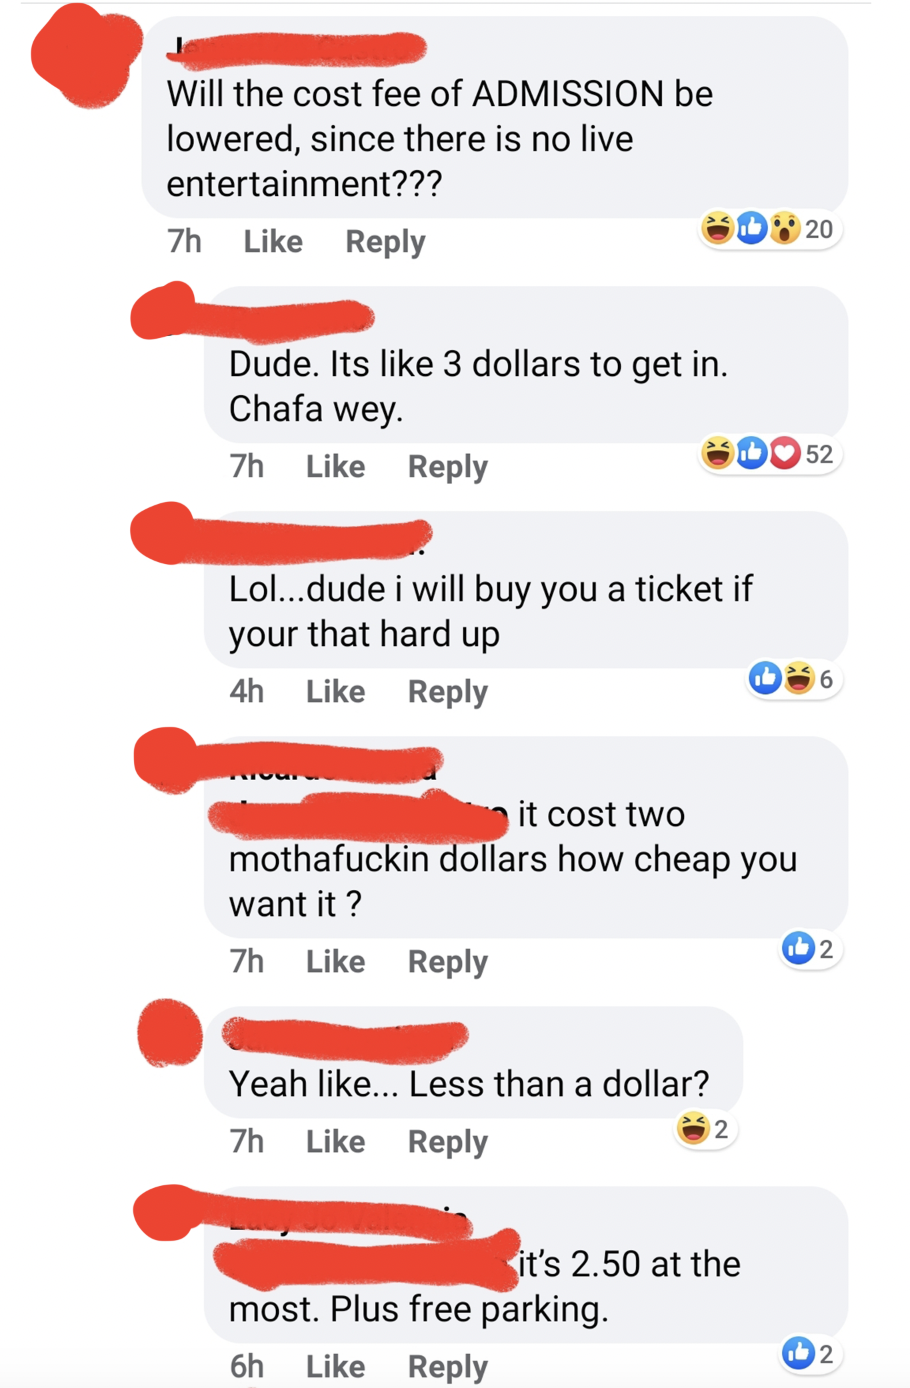 "less than a dollar?"